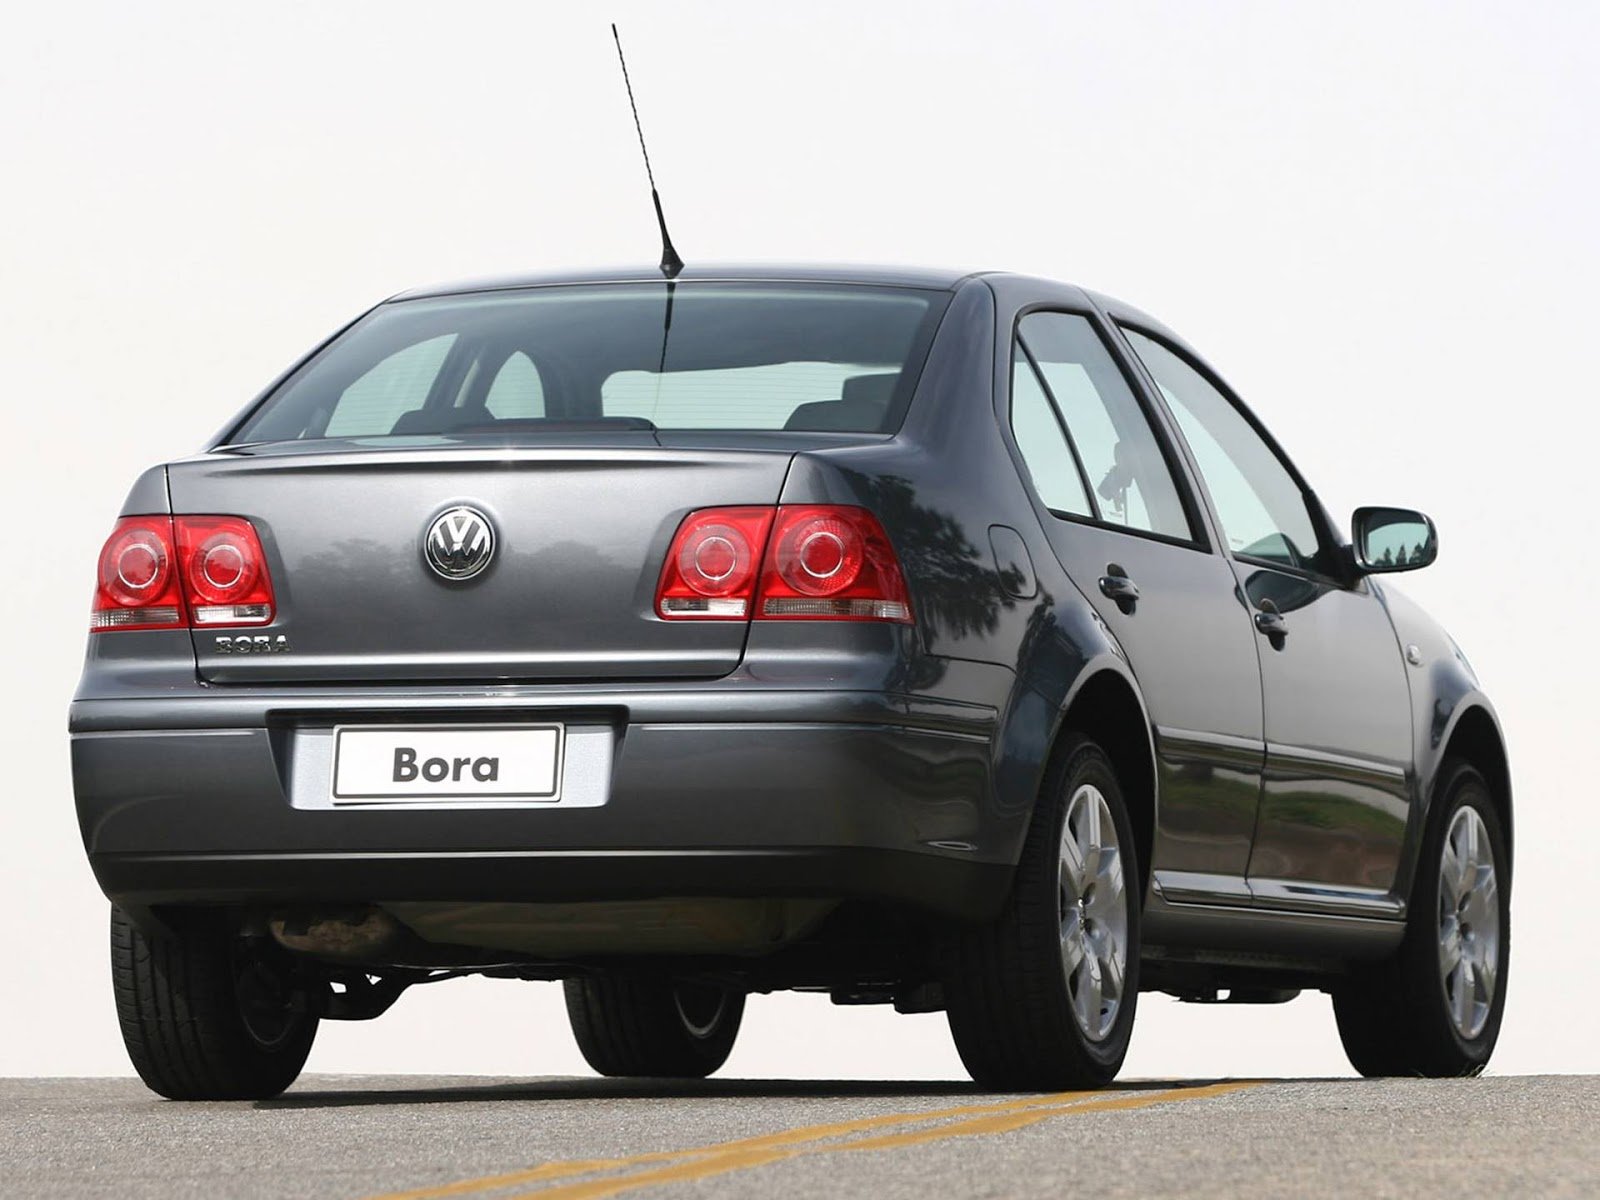 Volkswagen Bora exterior - Rear Left Angled